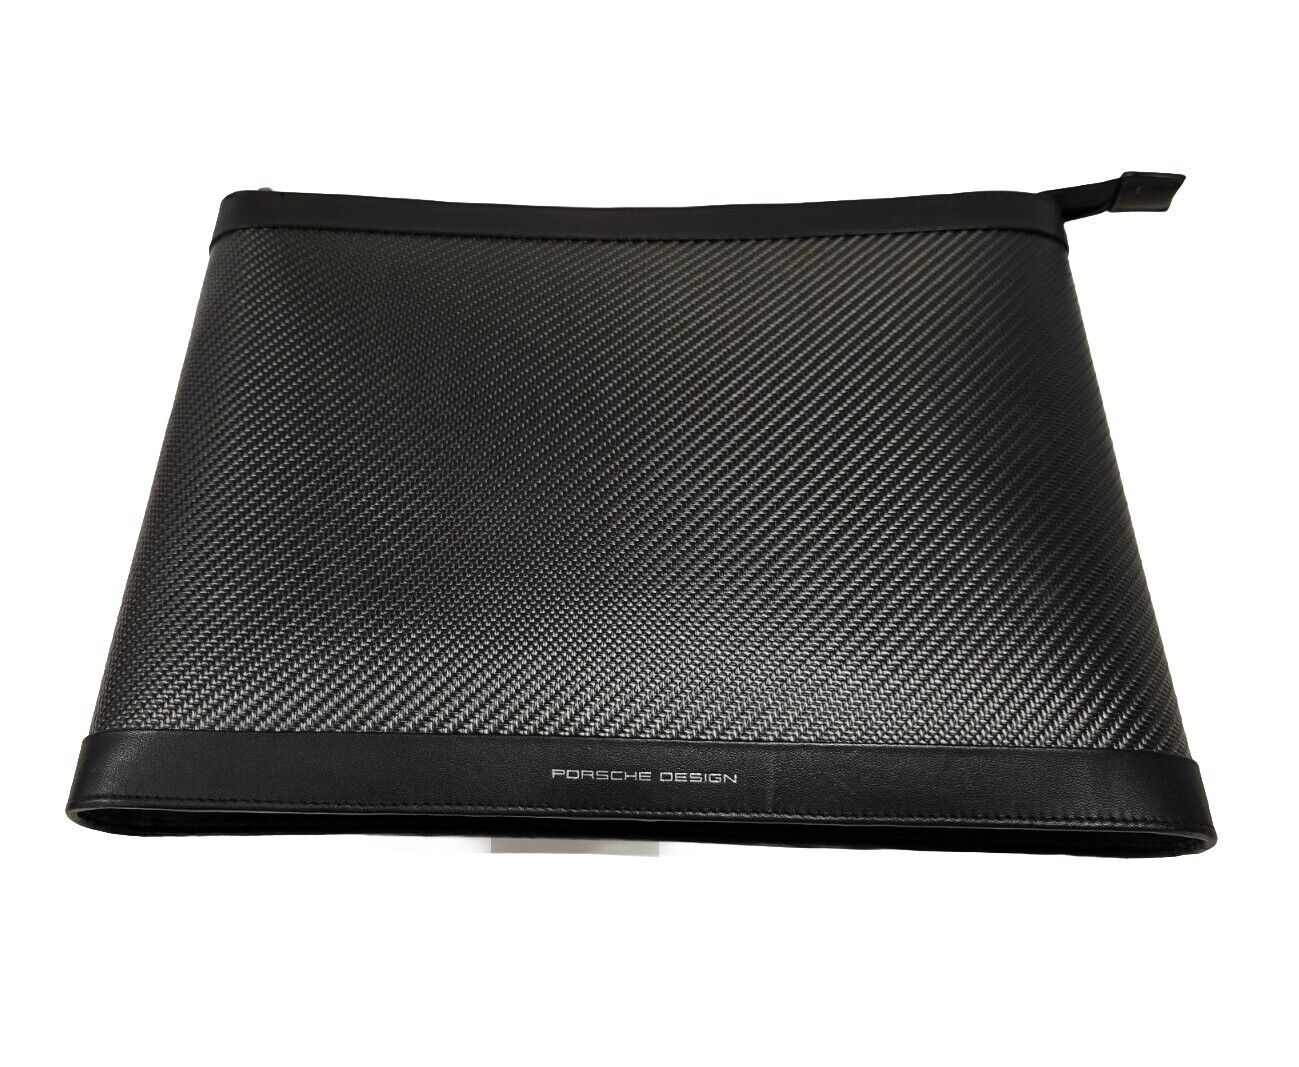 Porsche Design Carbon Fiber Leather Notebook Sleeve Carrying Pouch 4090002730